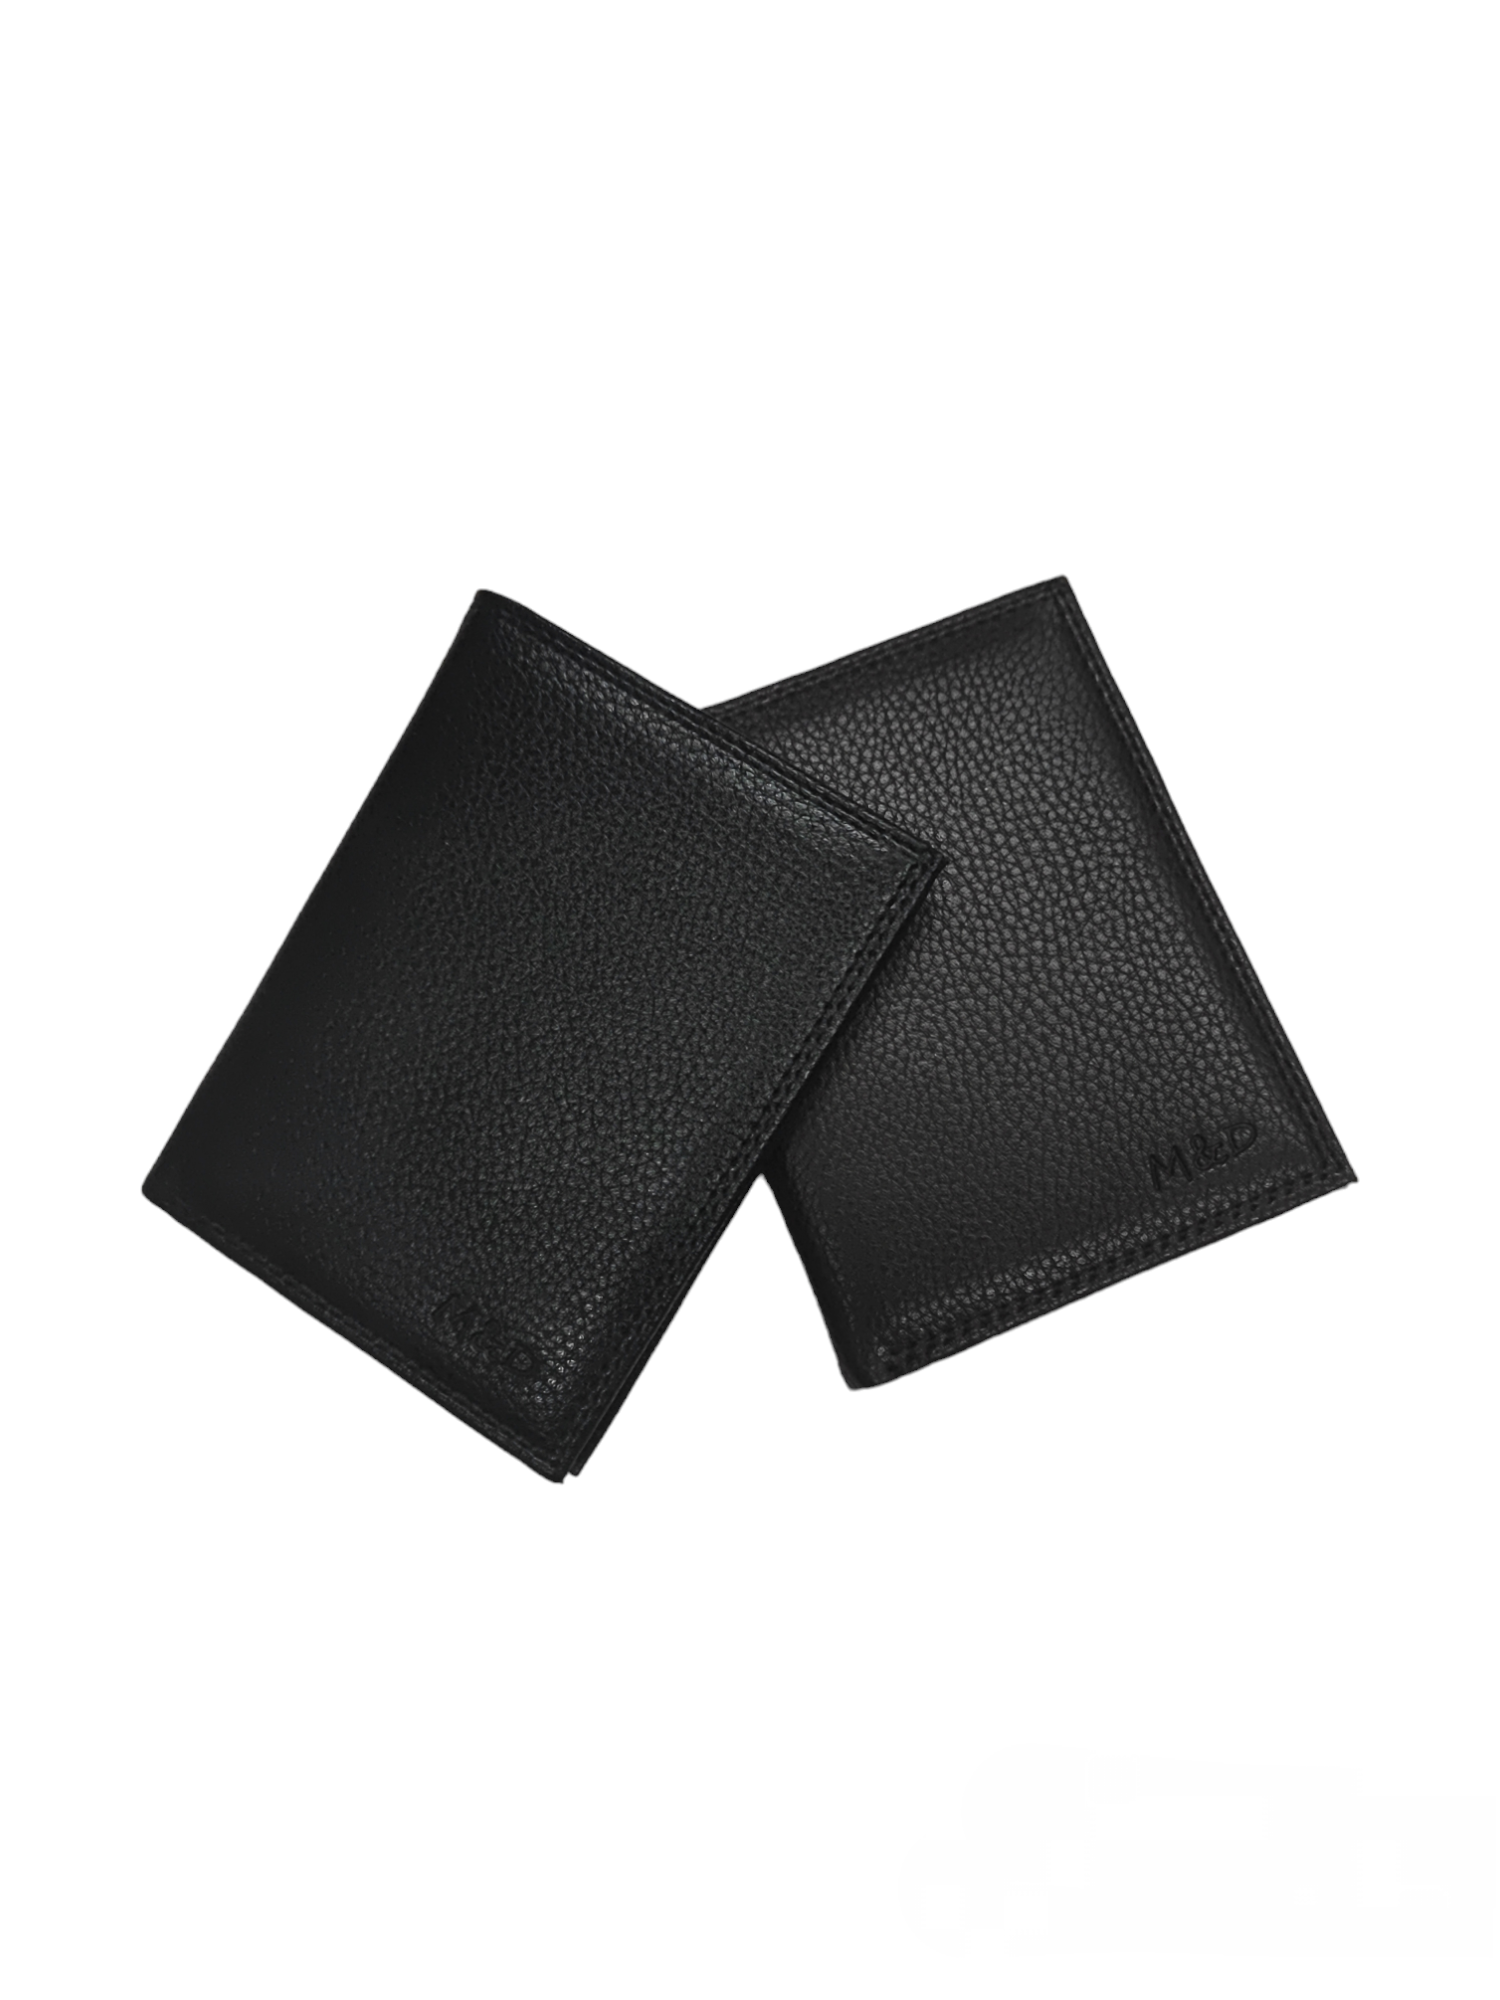 2-fold imitation leather walletpm With Gift Box (x3)